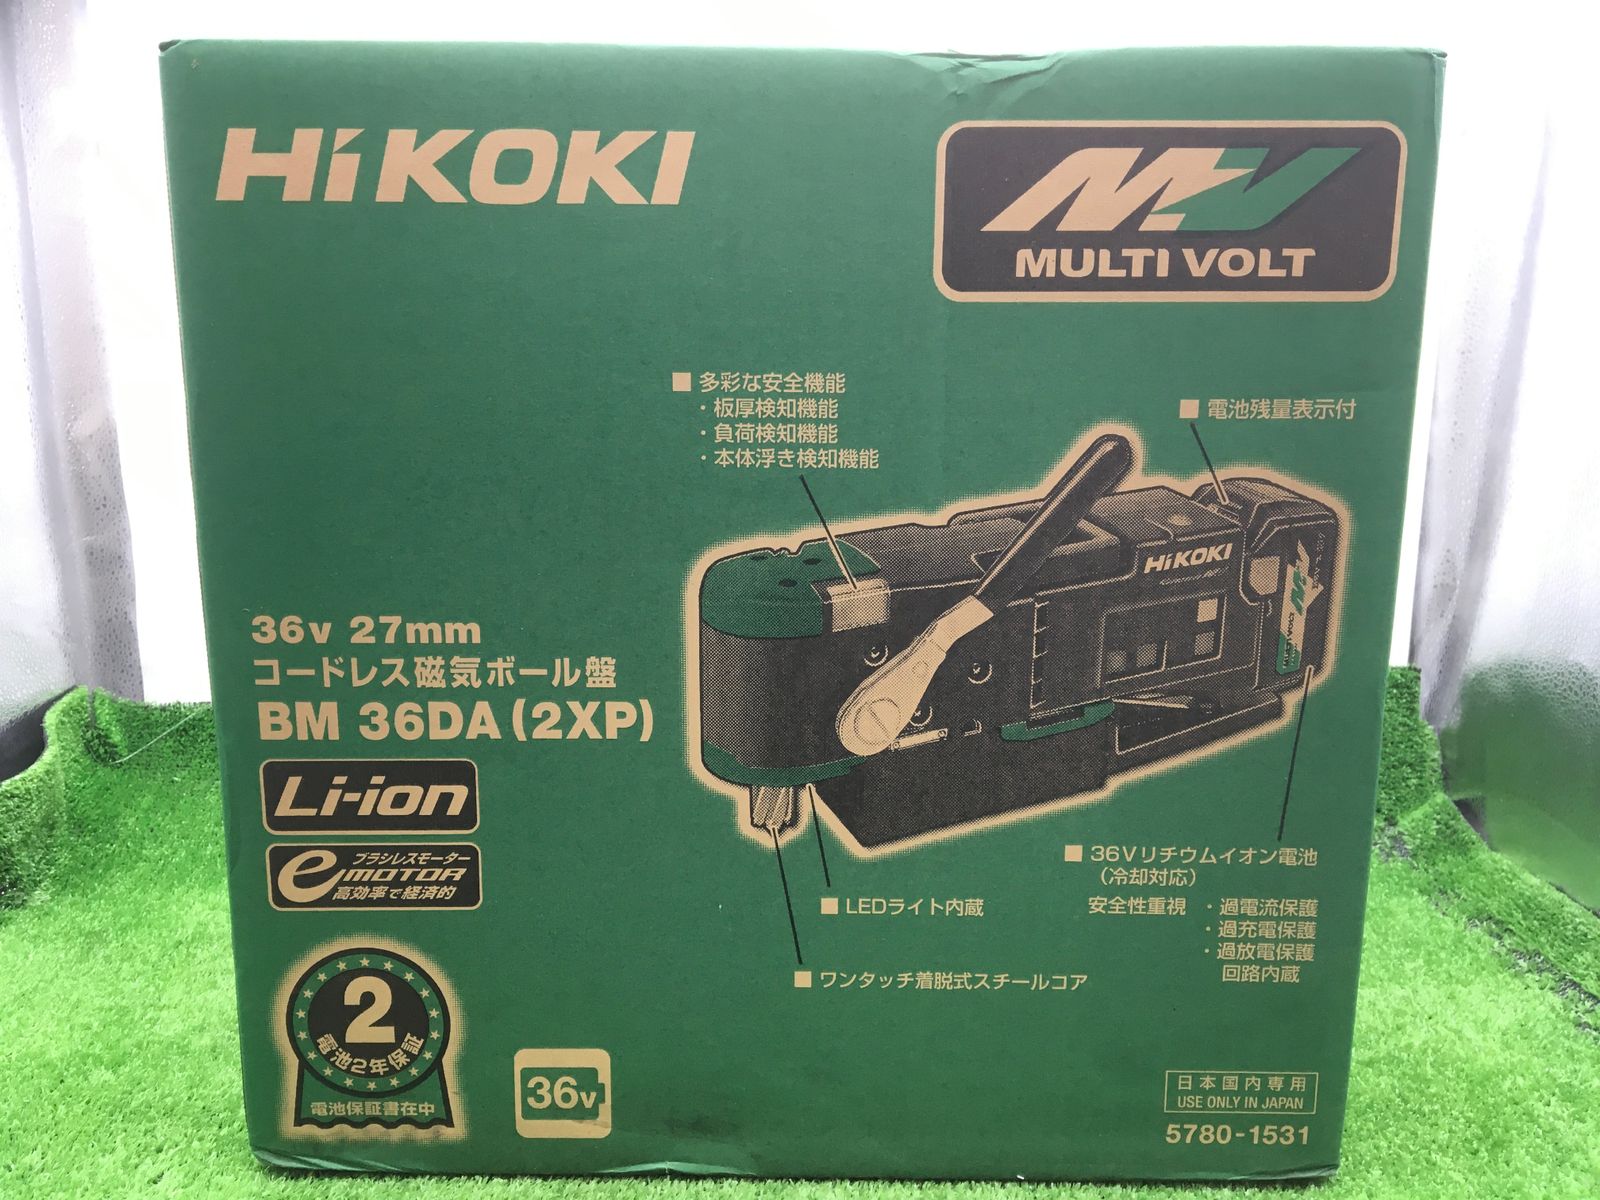 HIKOKI マルチボルト コードレス磁気ボール盤 BM36DA(2XP) - 11